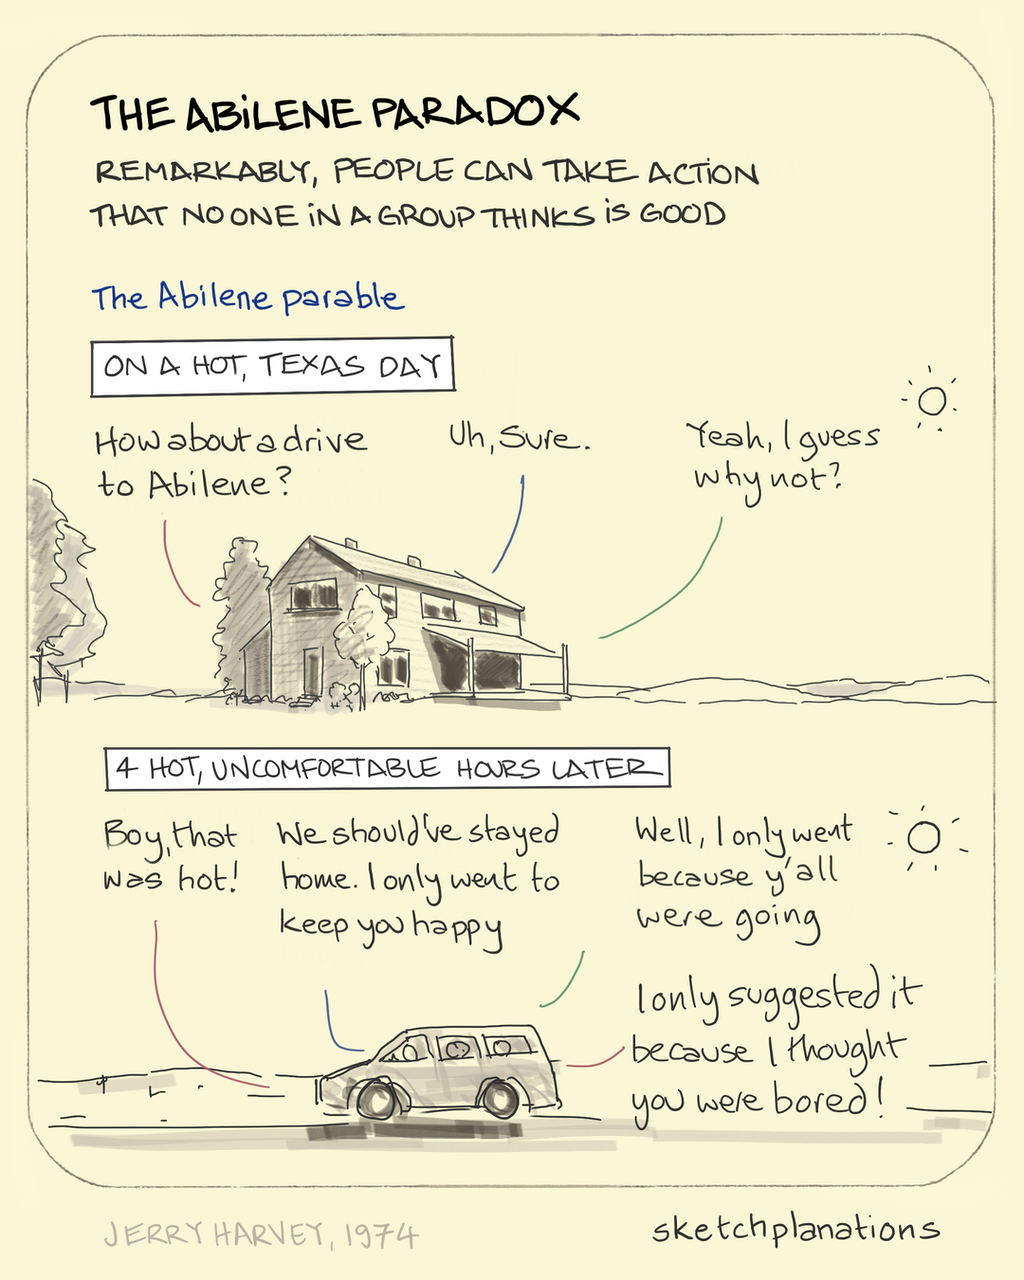 The Abilene Paradox sketchplanation